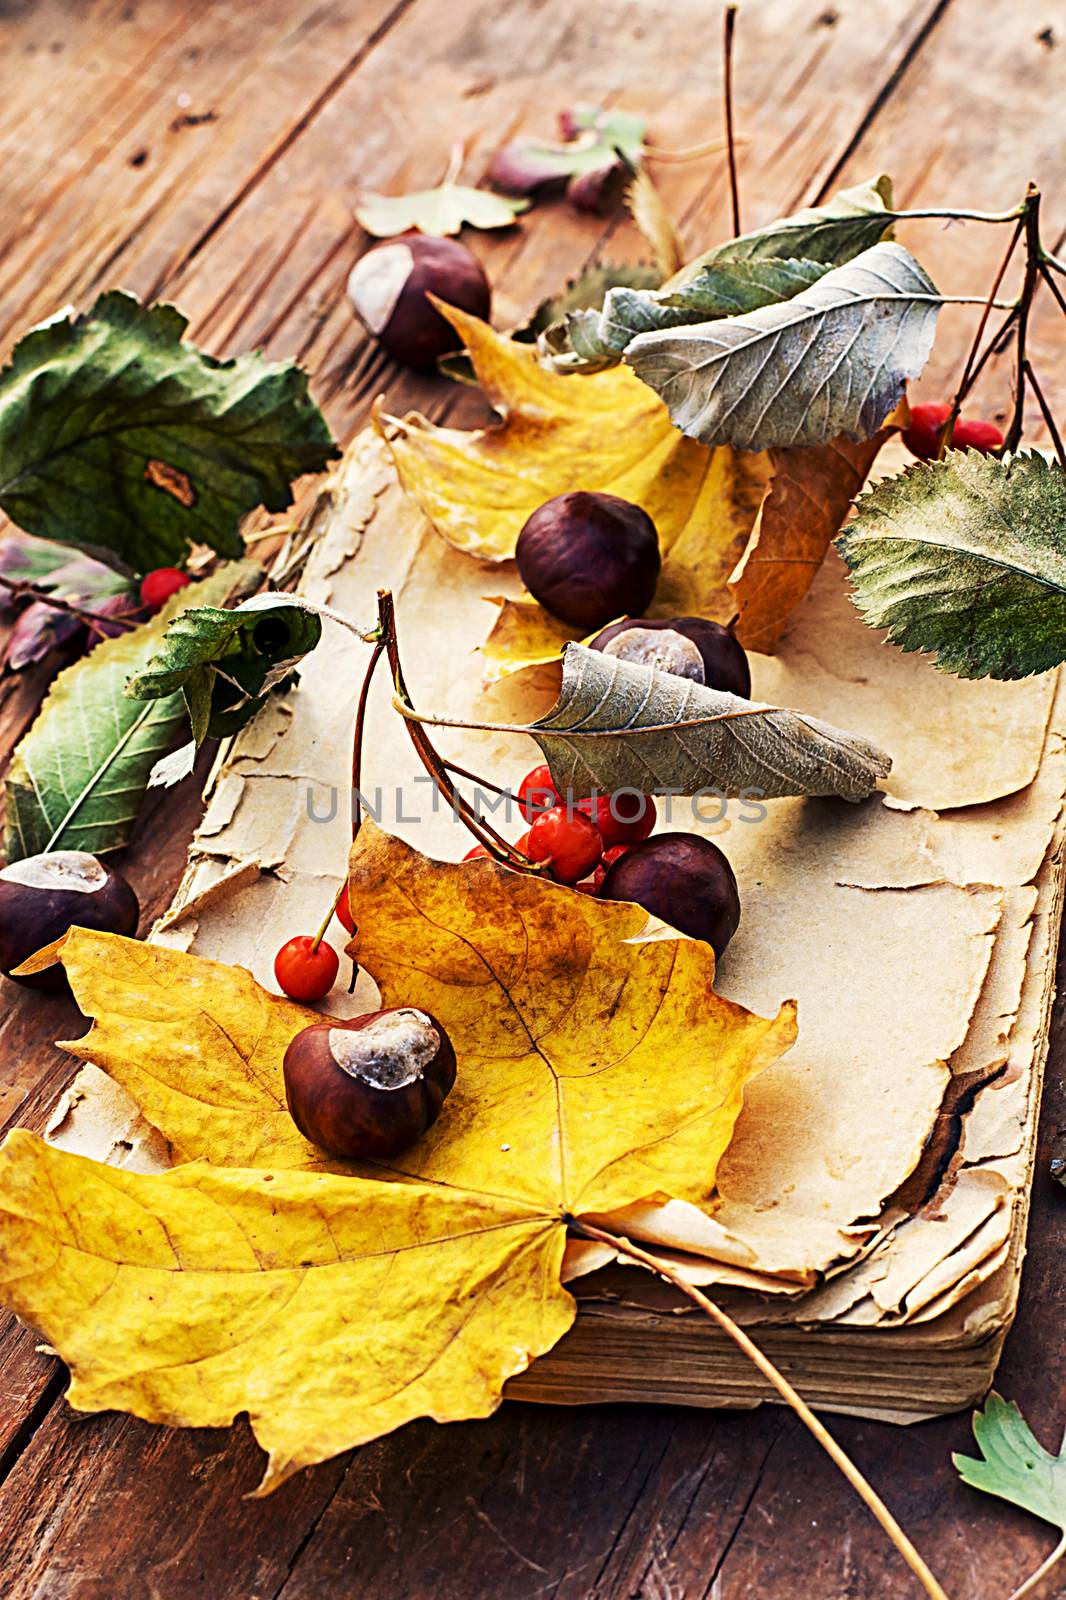 Symbols of autumn by LMykola